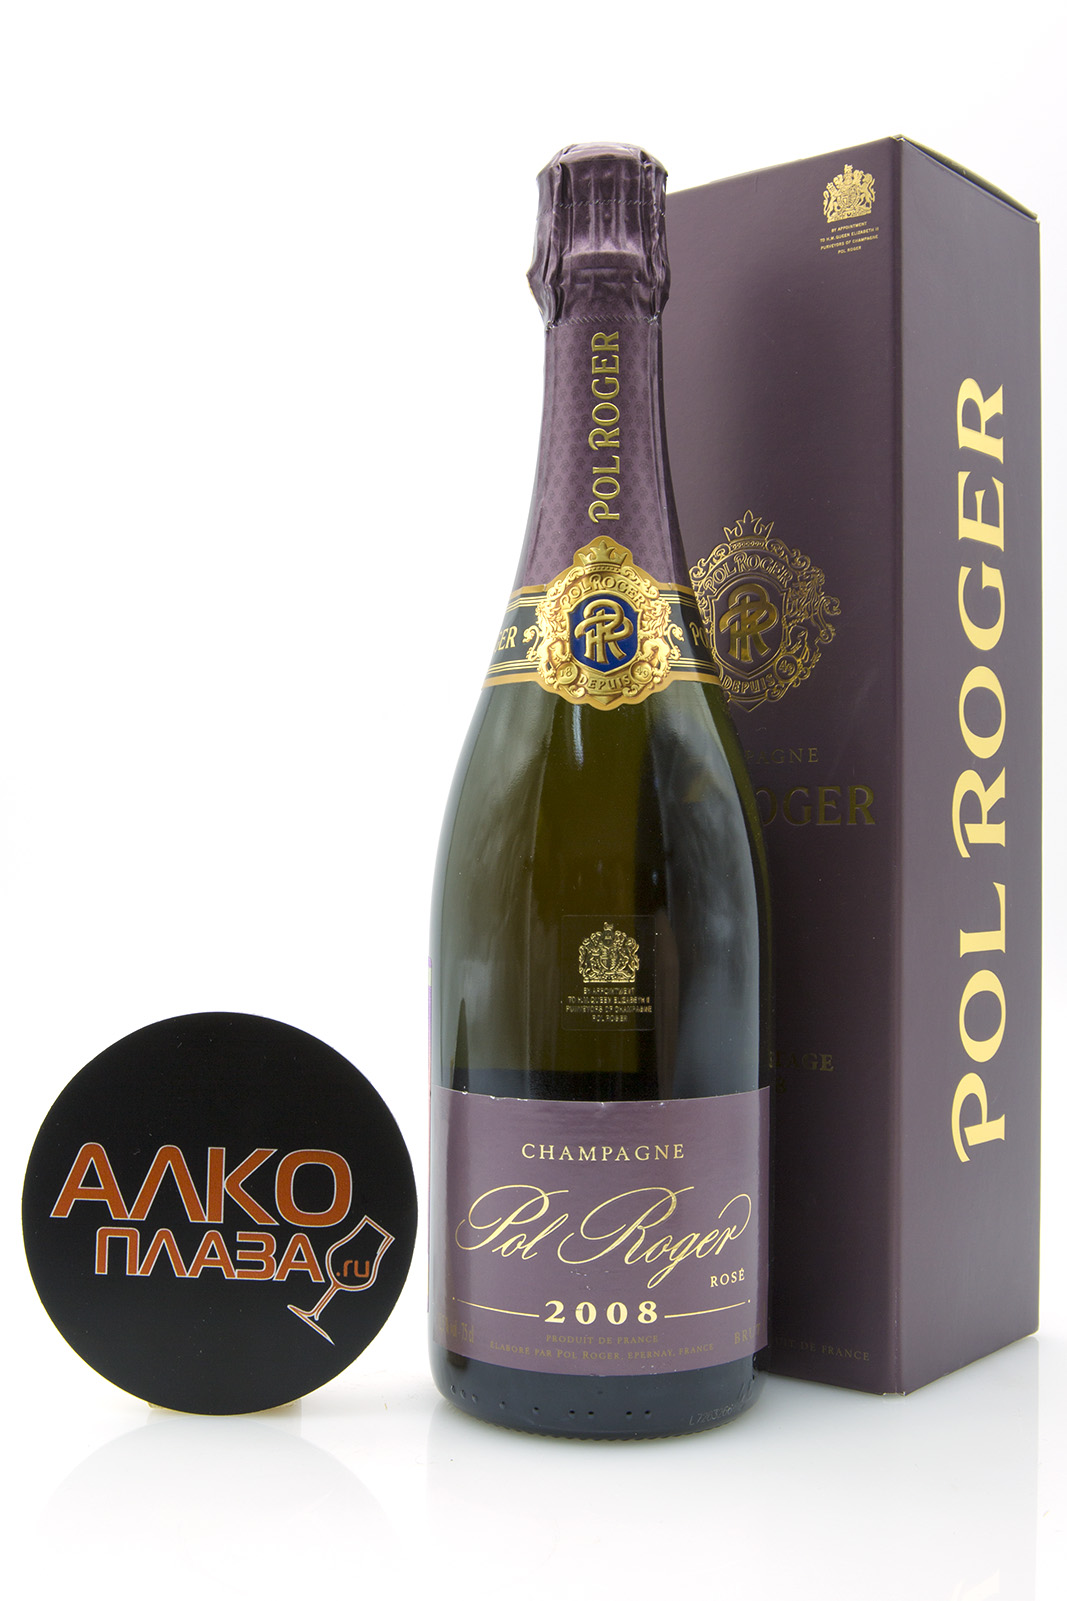 Pol Roger Brut Rose 2008 0.75l Gift Box Шампанское Поль Роже Брют Розе 2008 г. 0.75 л.